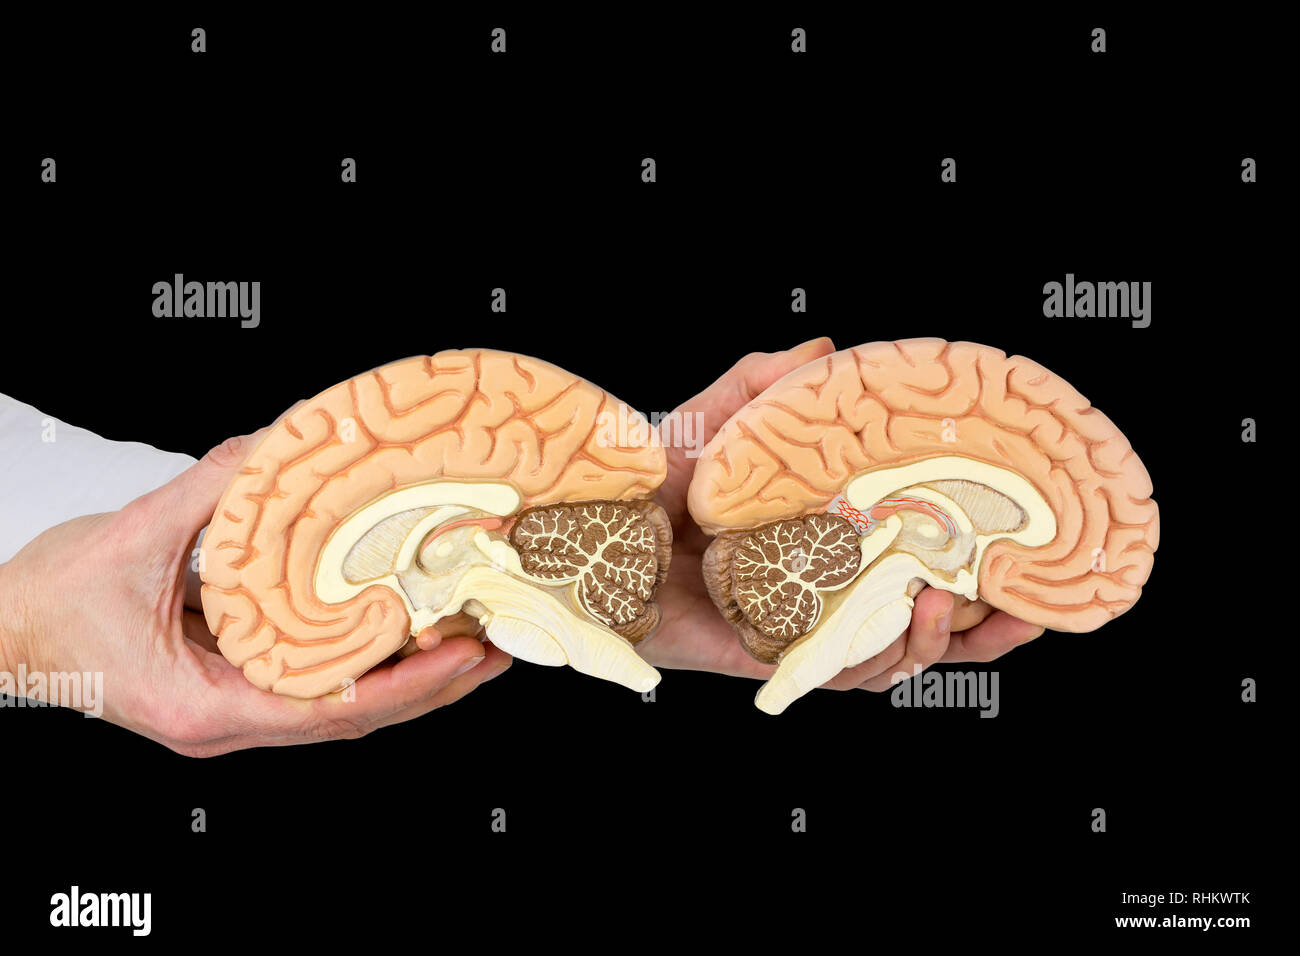 Hands holding models human brain hemispheres isolated on black background Stock Photo